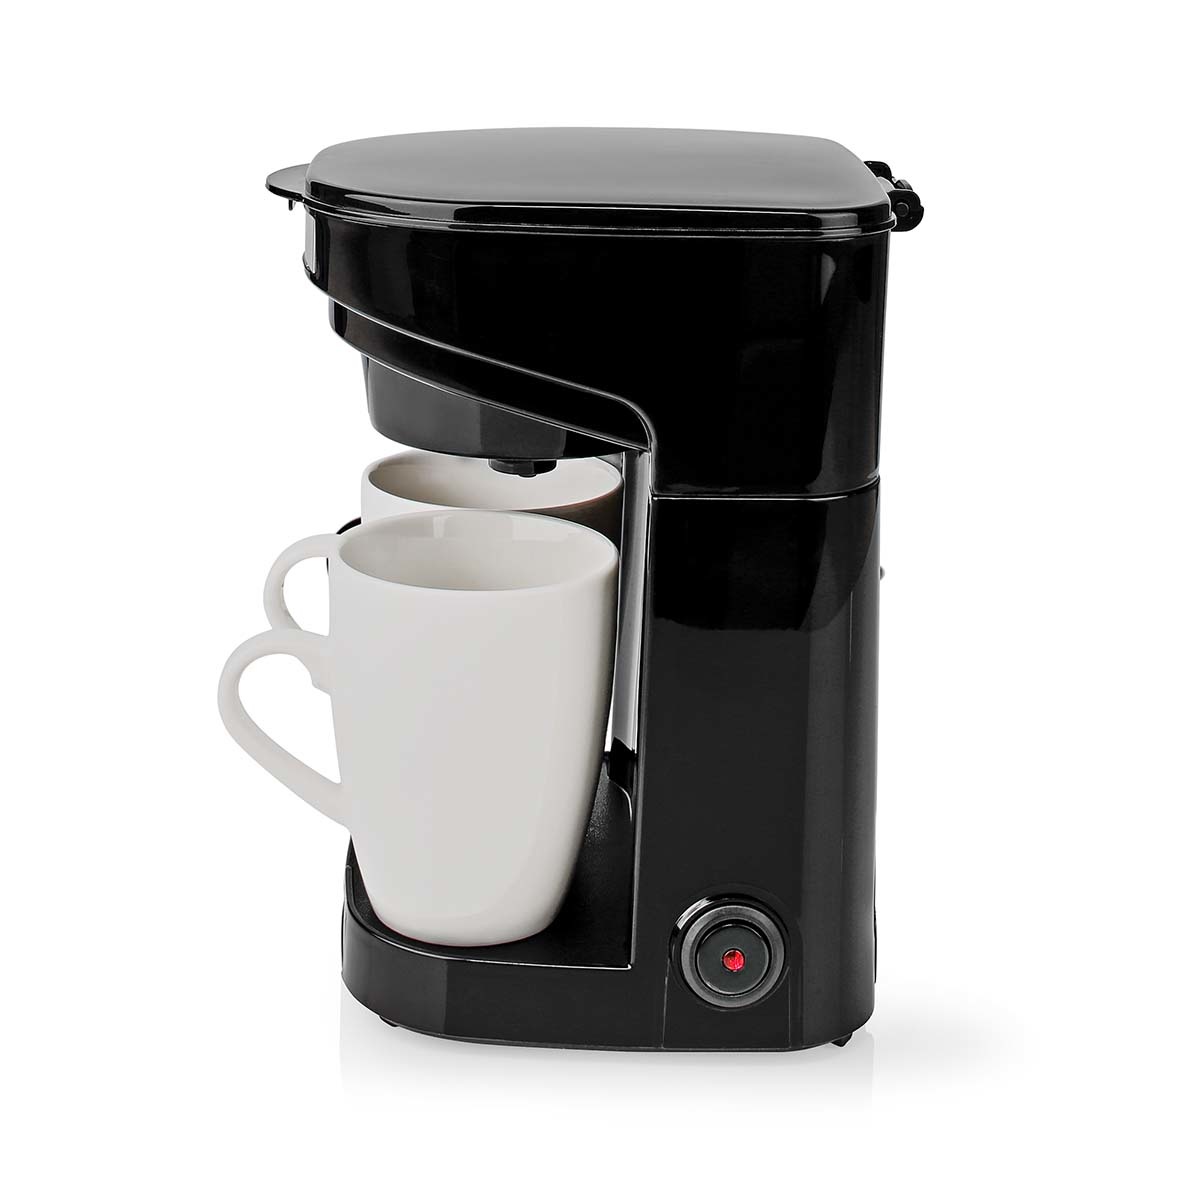 Uitsluiten afbreken omroeper Nedis KACM140EBK koffiezetapparaat met 2 kopjes | Maxtotaal! - Maxtotaal